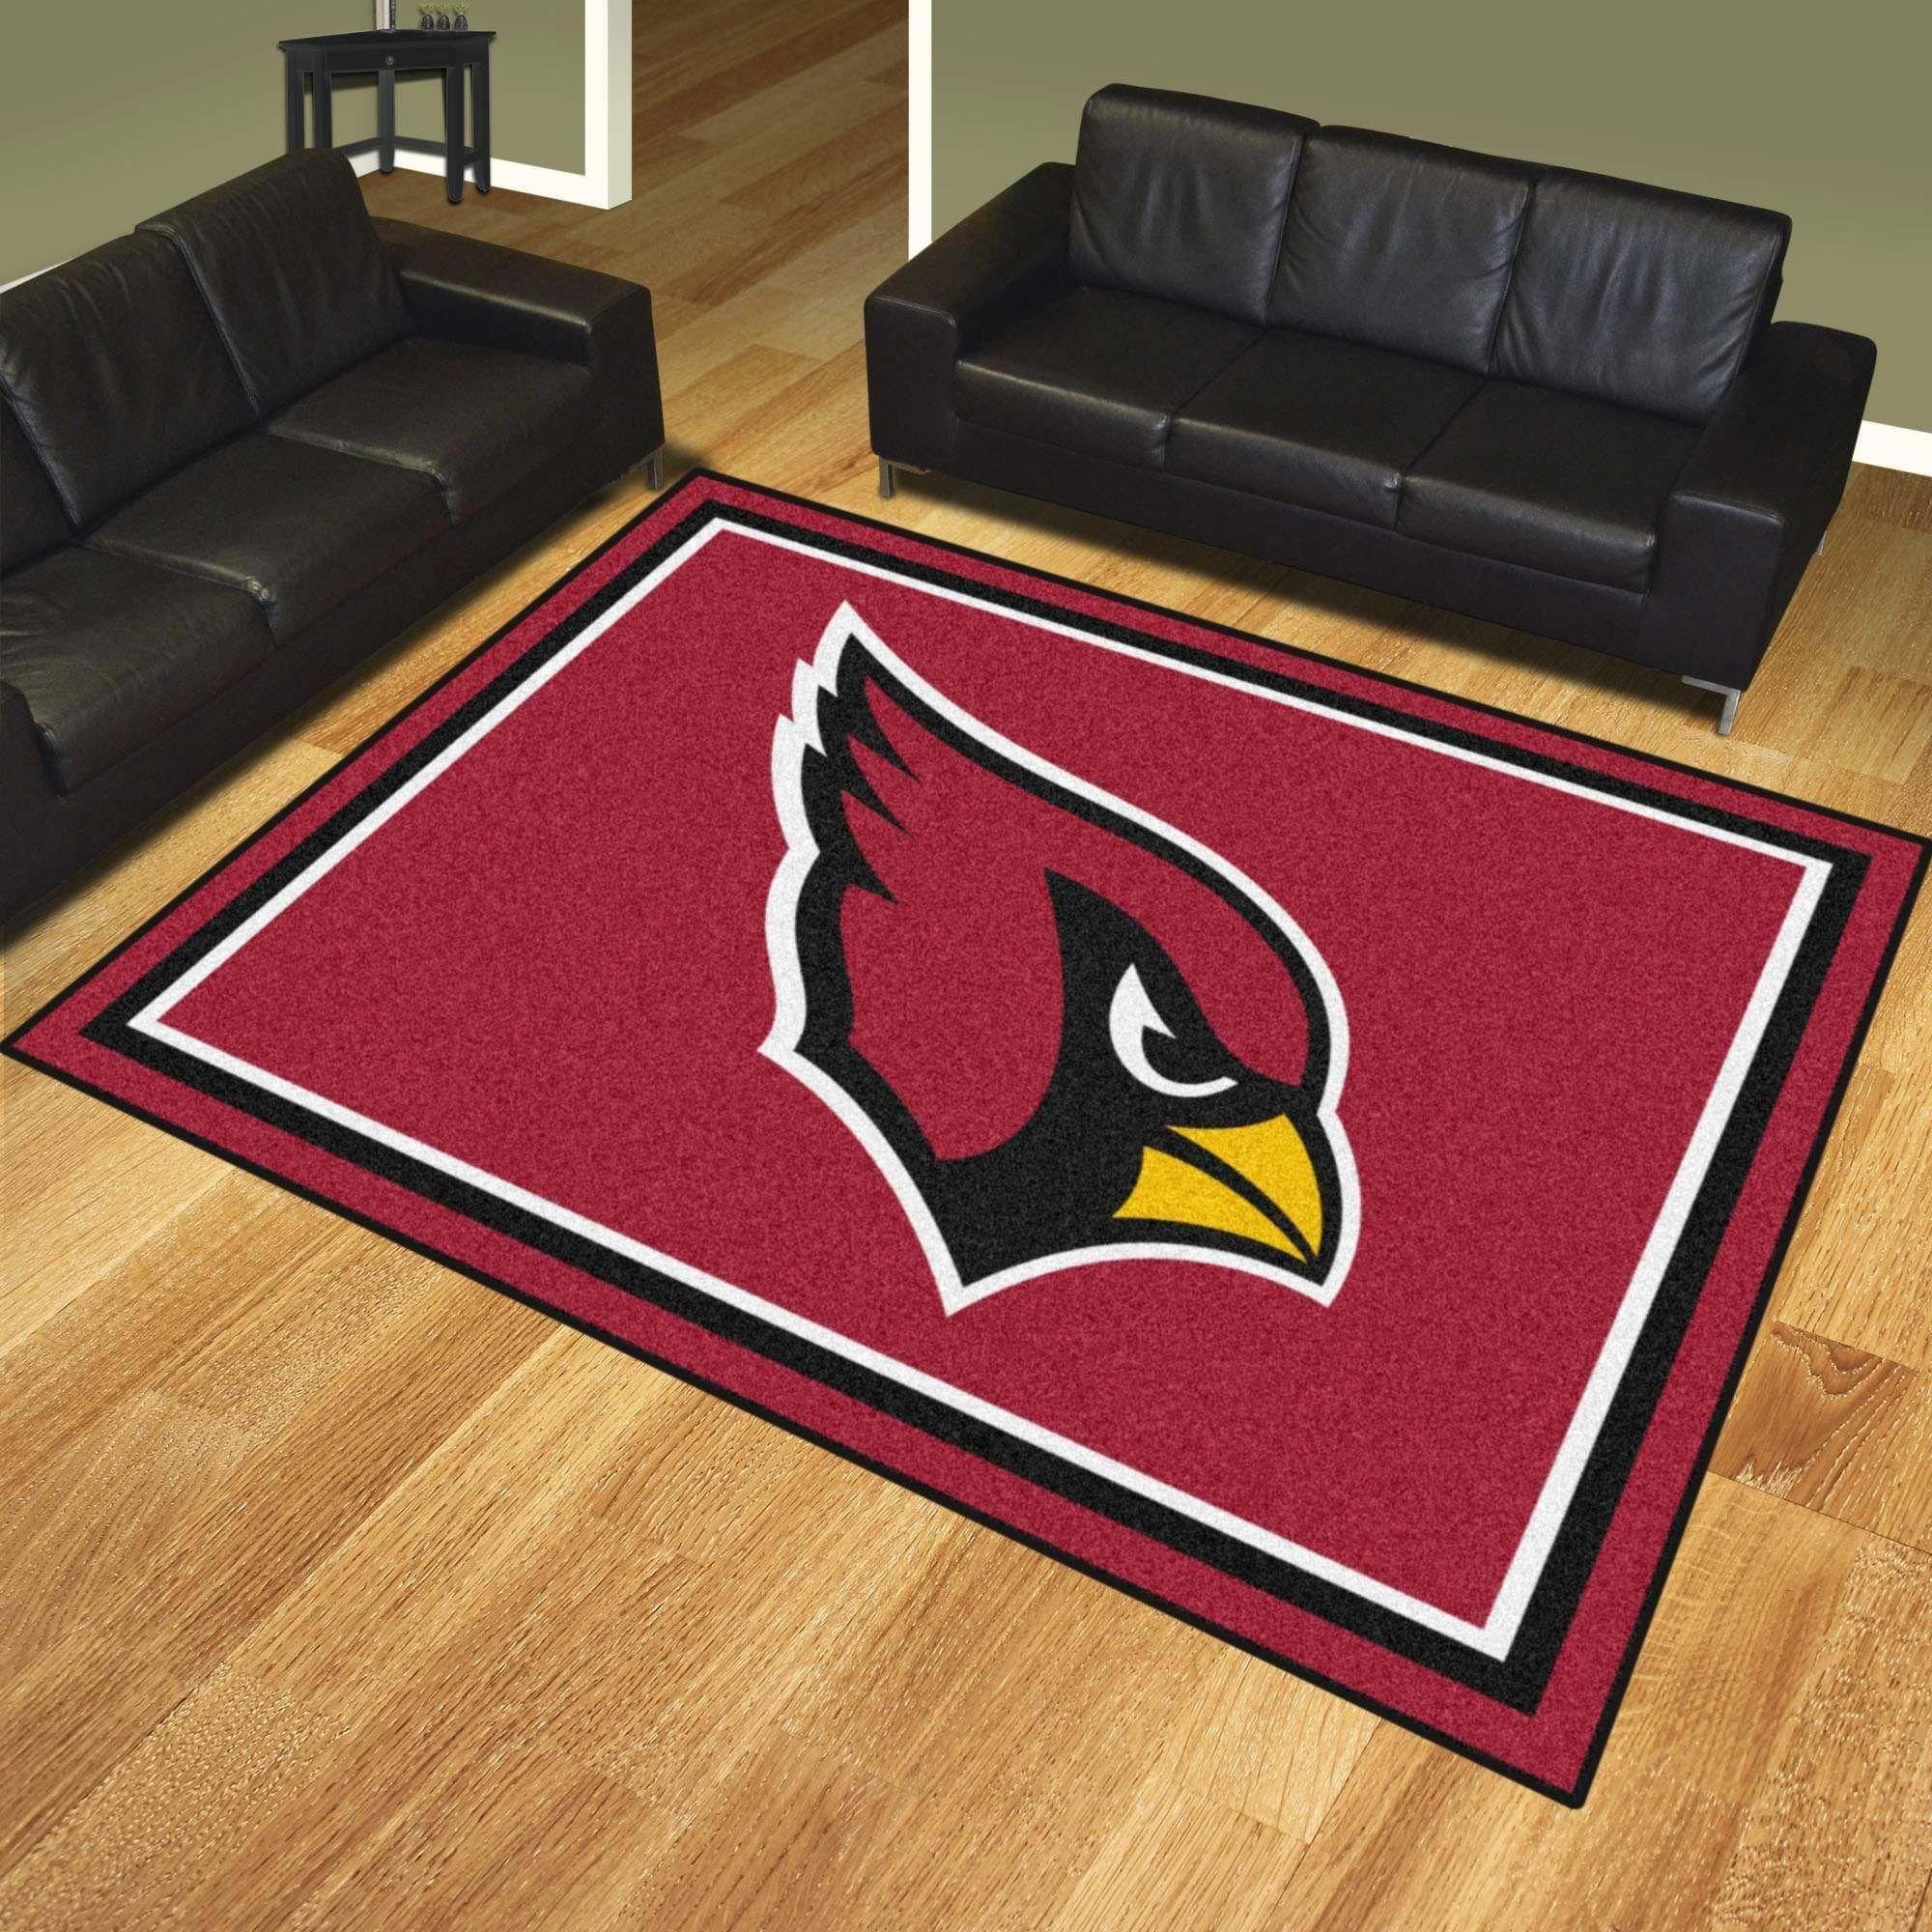 Arizona Cardinals Area Rug Chrismas Gift – Indoor Outdoor Rugs